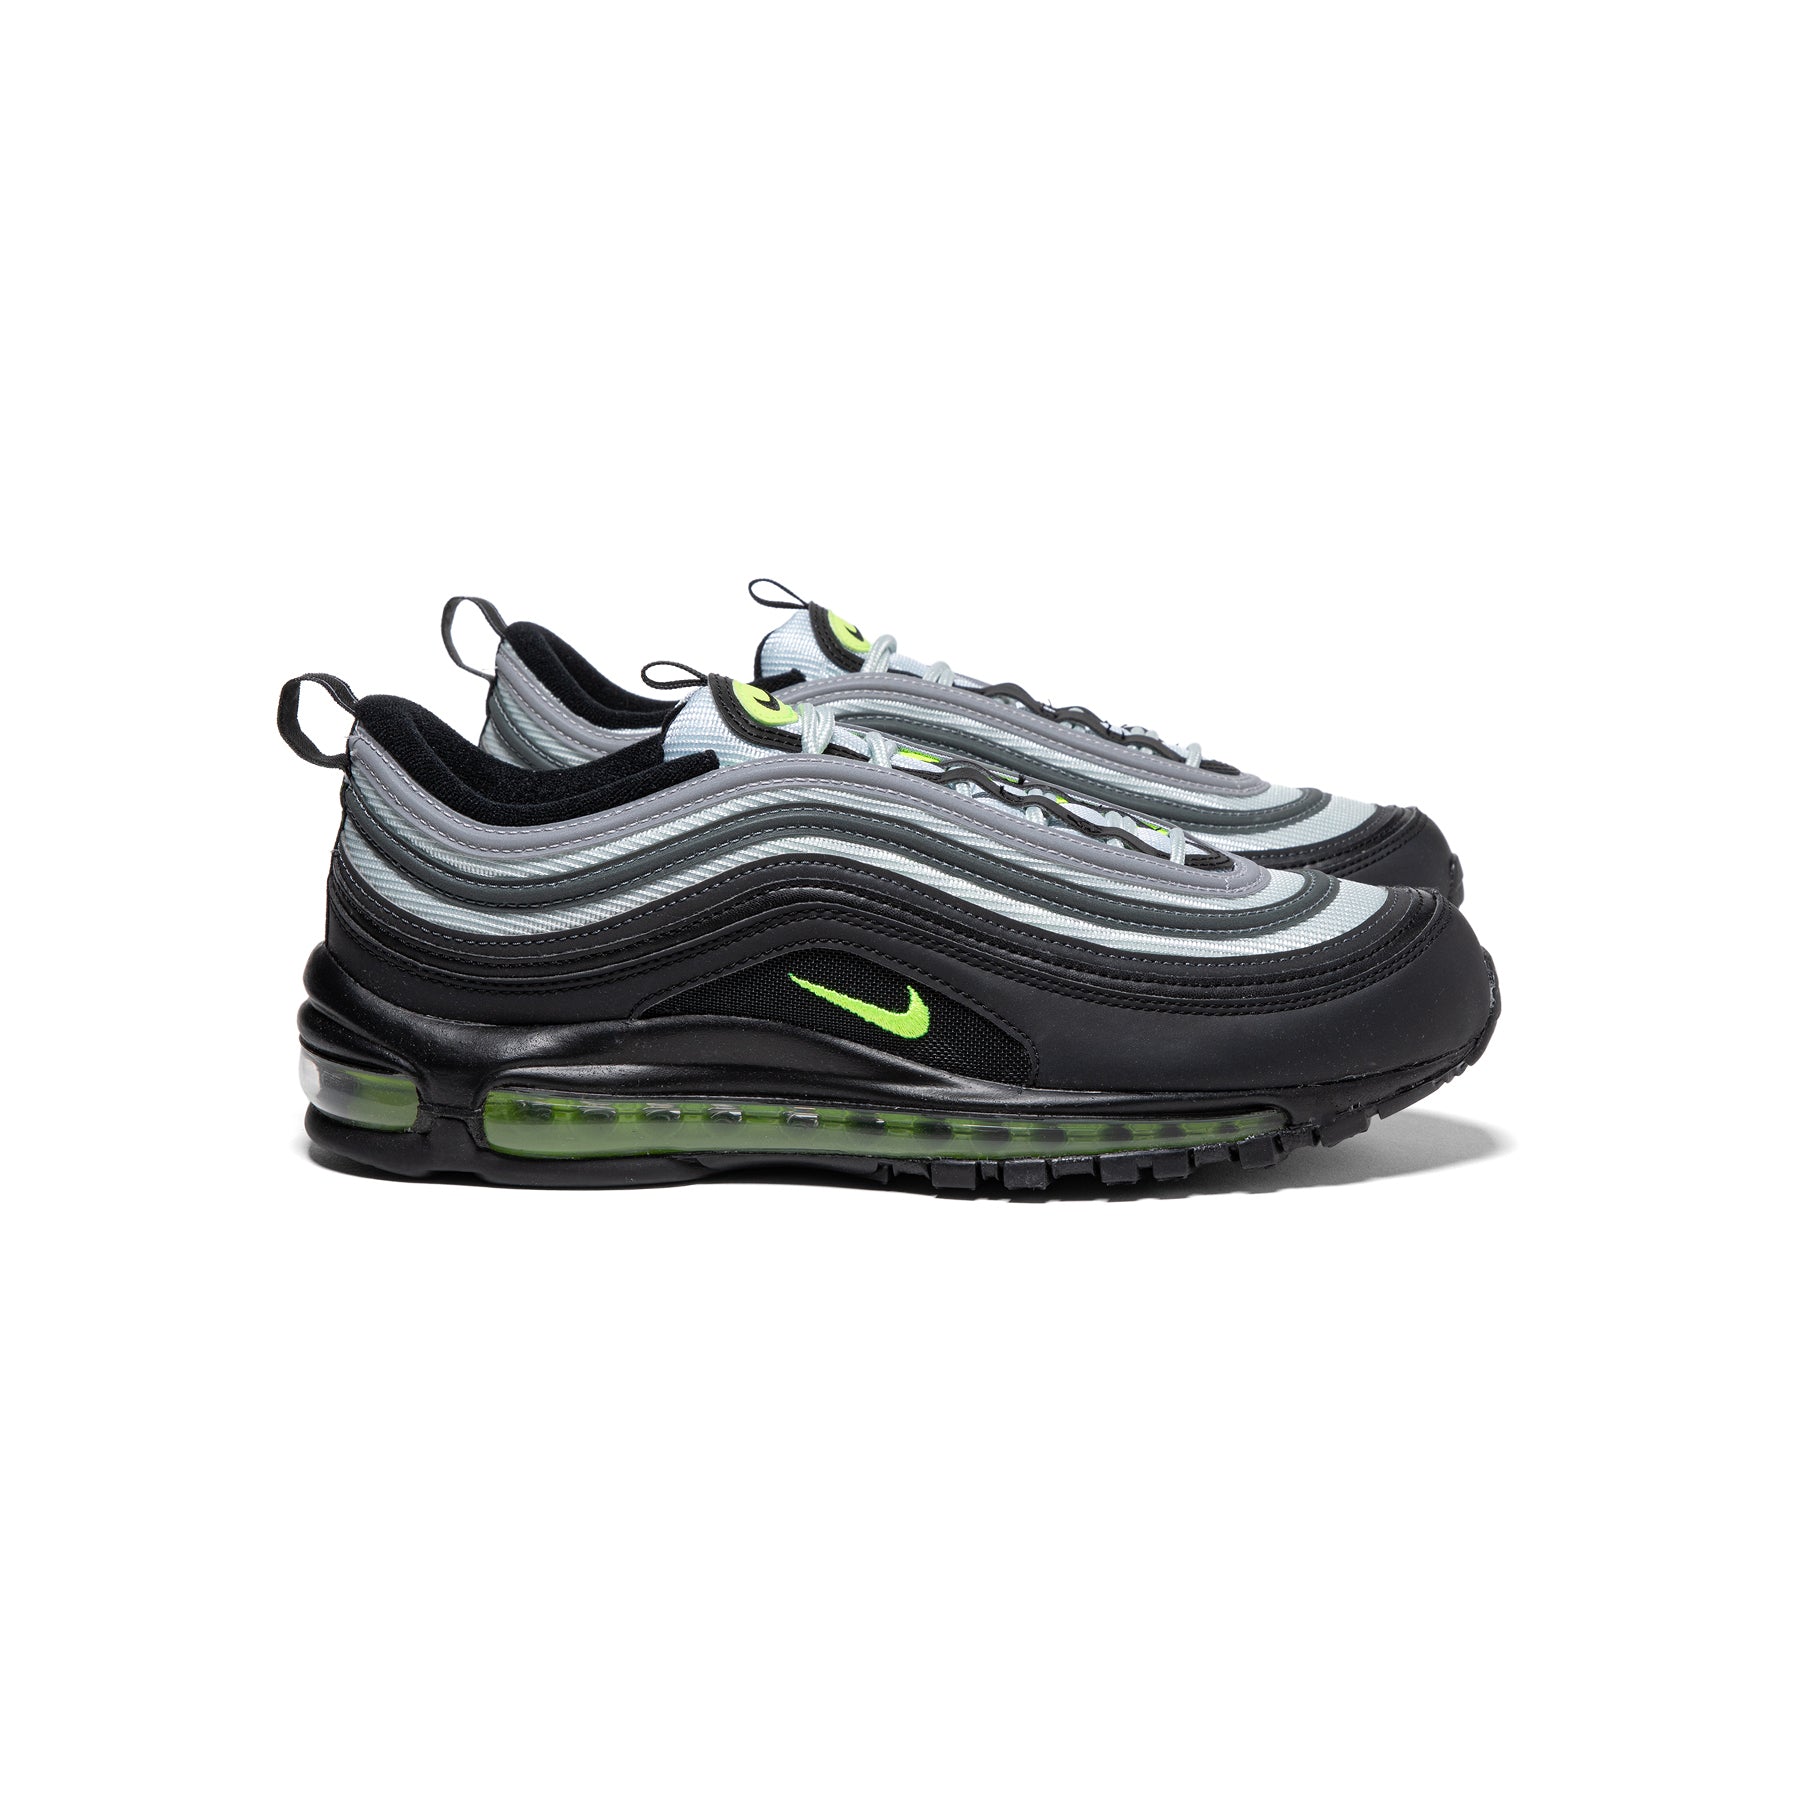 Nike Air Max 97 Sneakers in Black